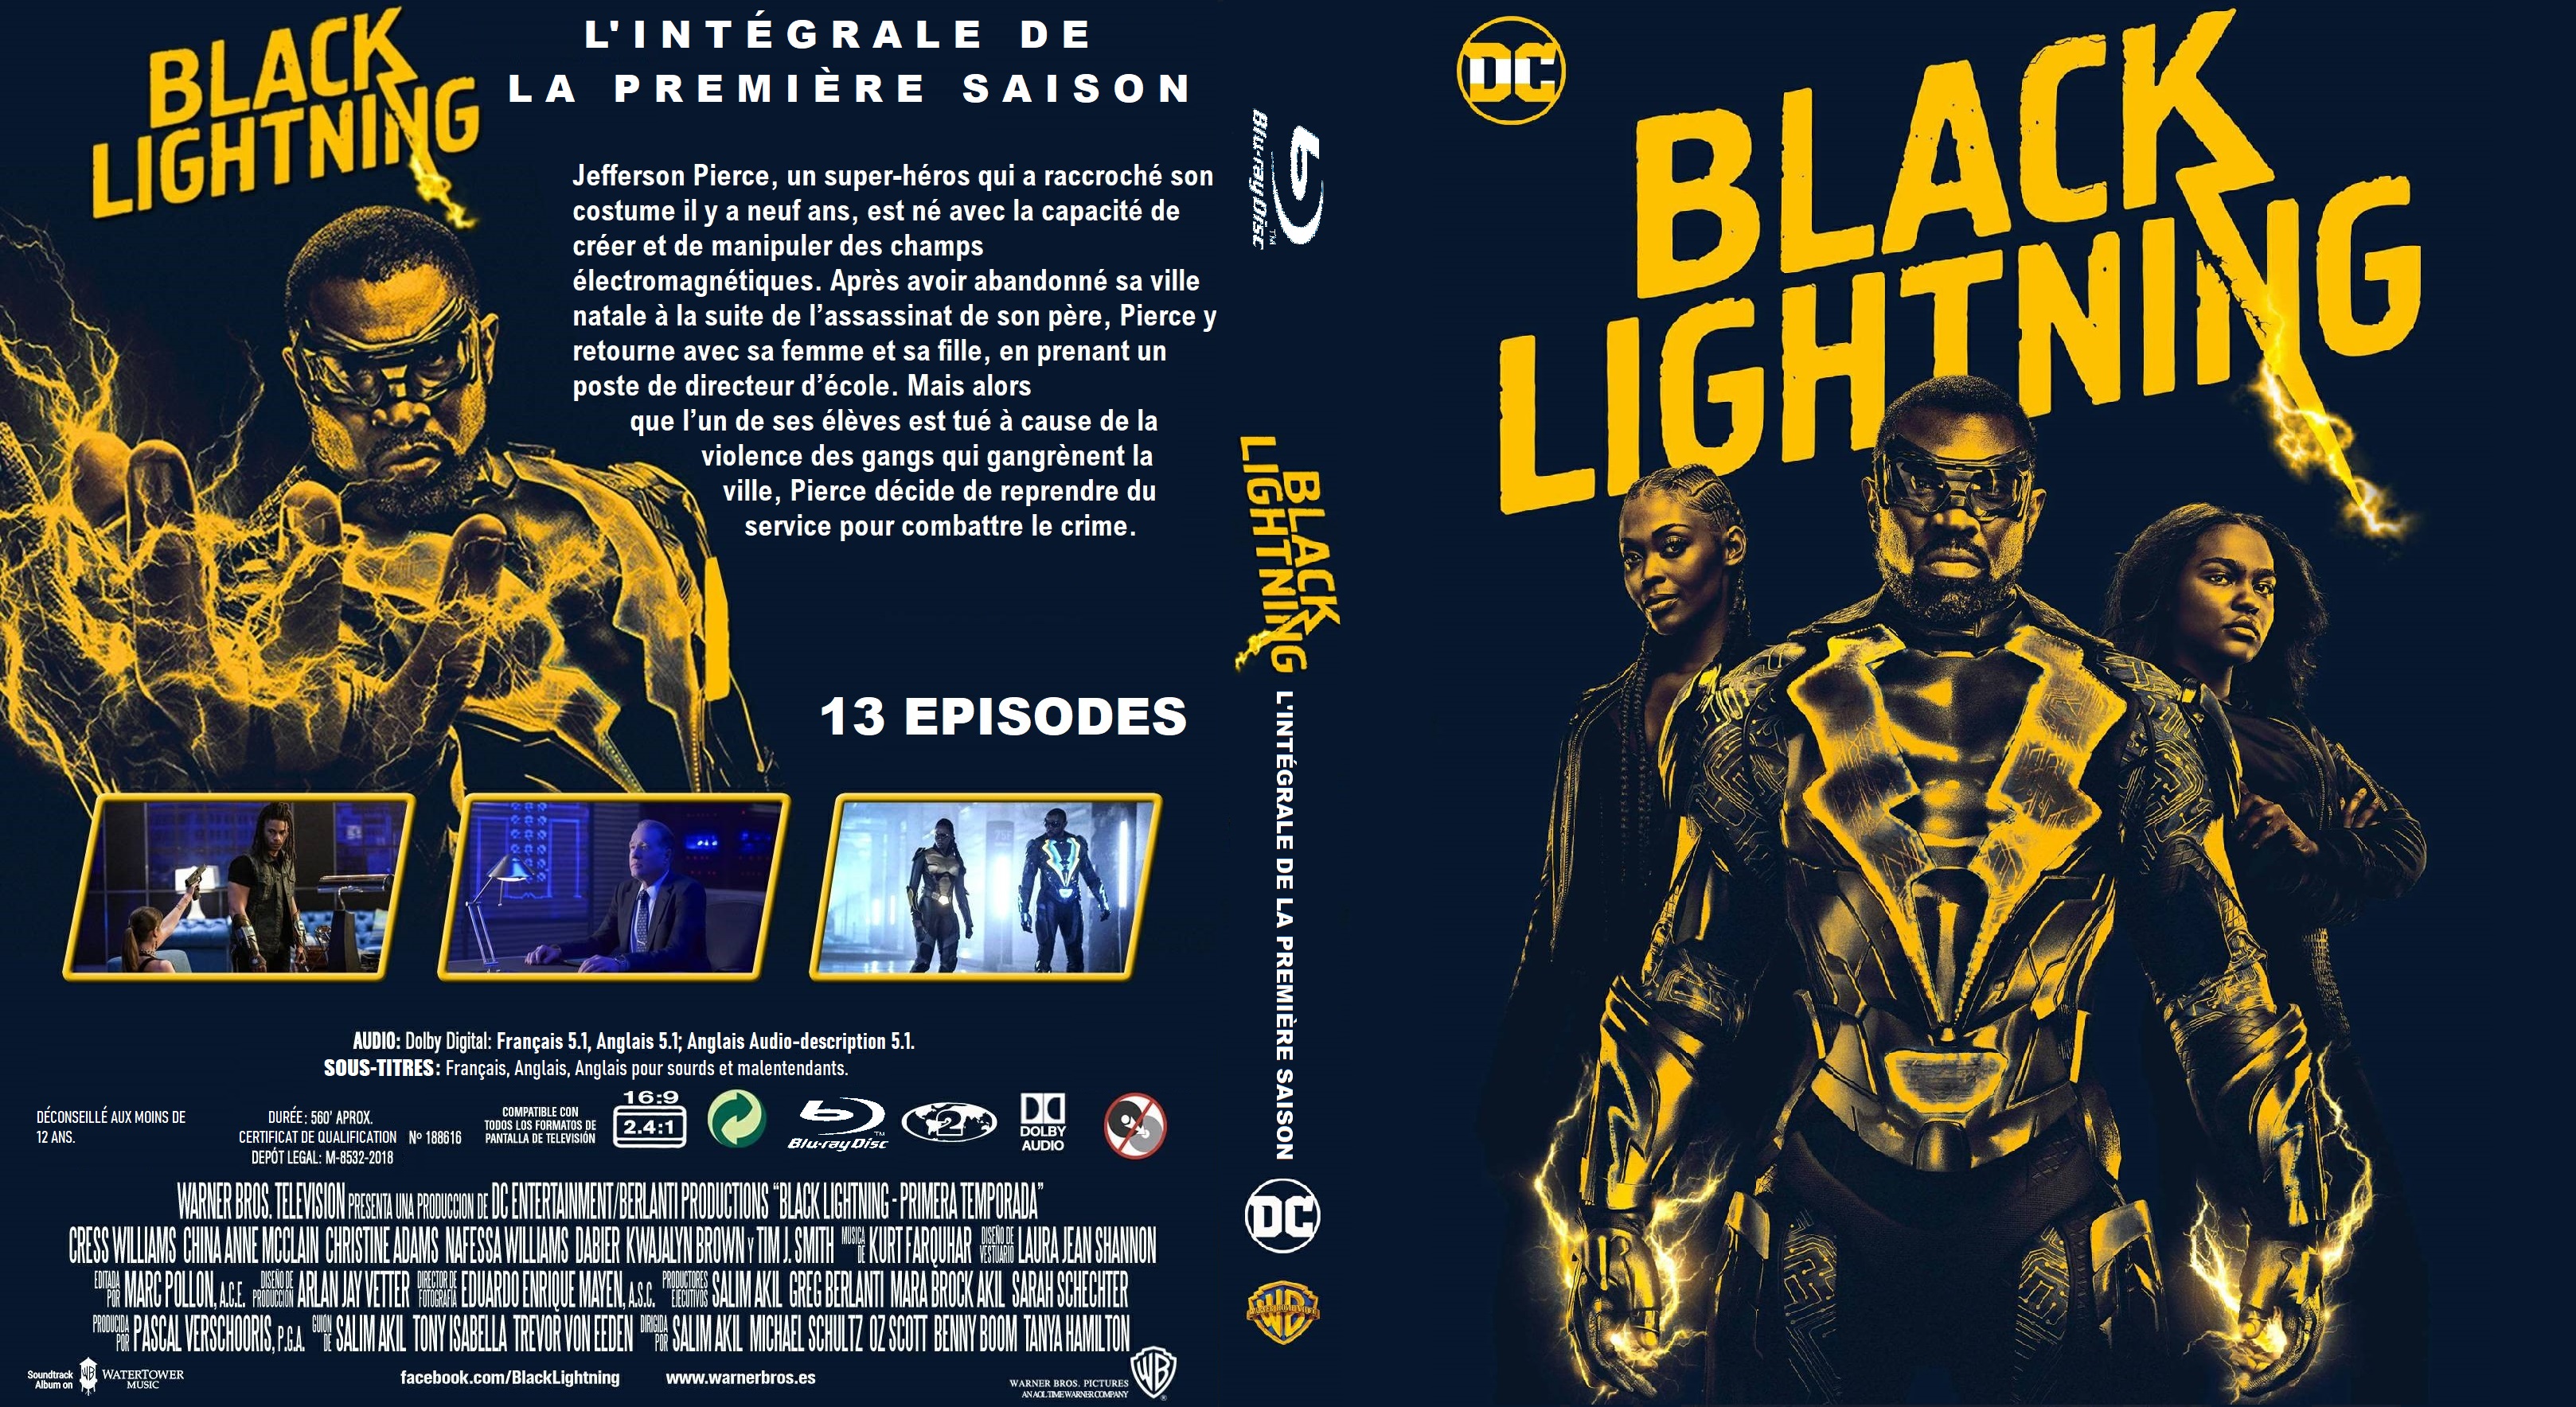 Jaquette DVD Black Lightning saison 1 custom (BLU-RAY) v2